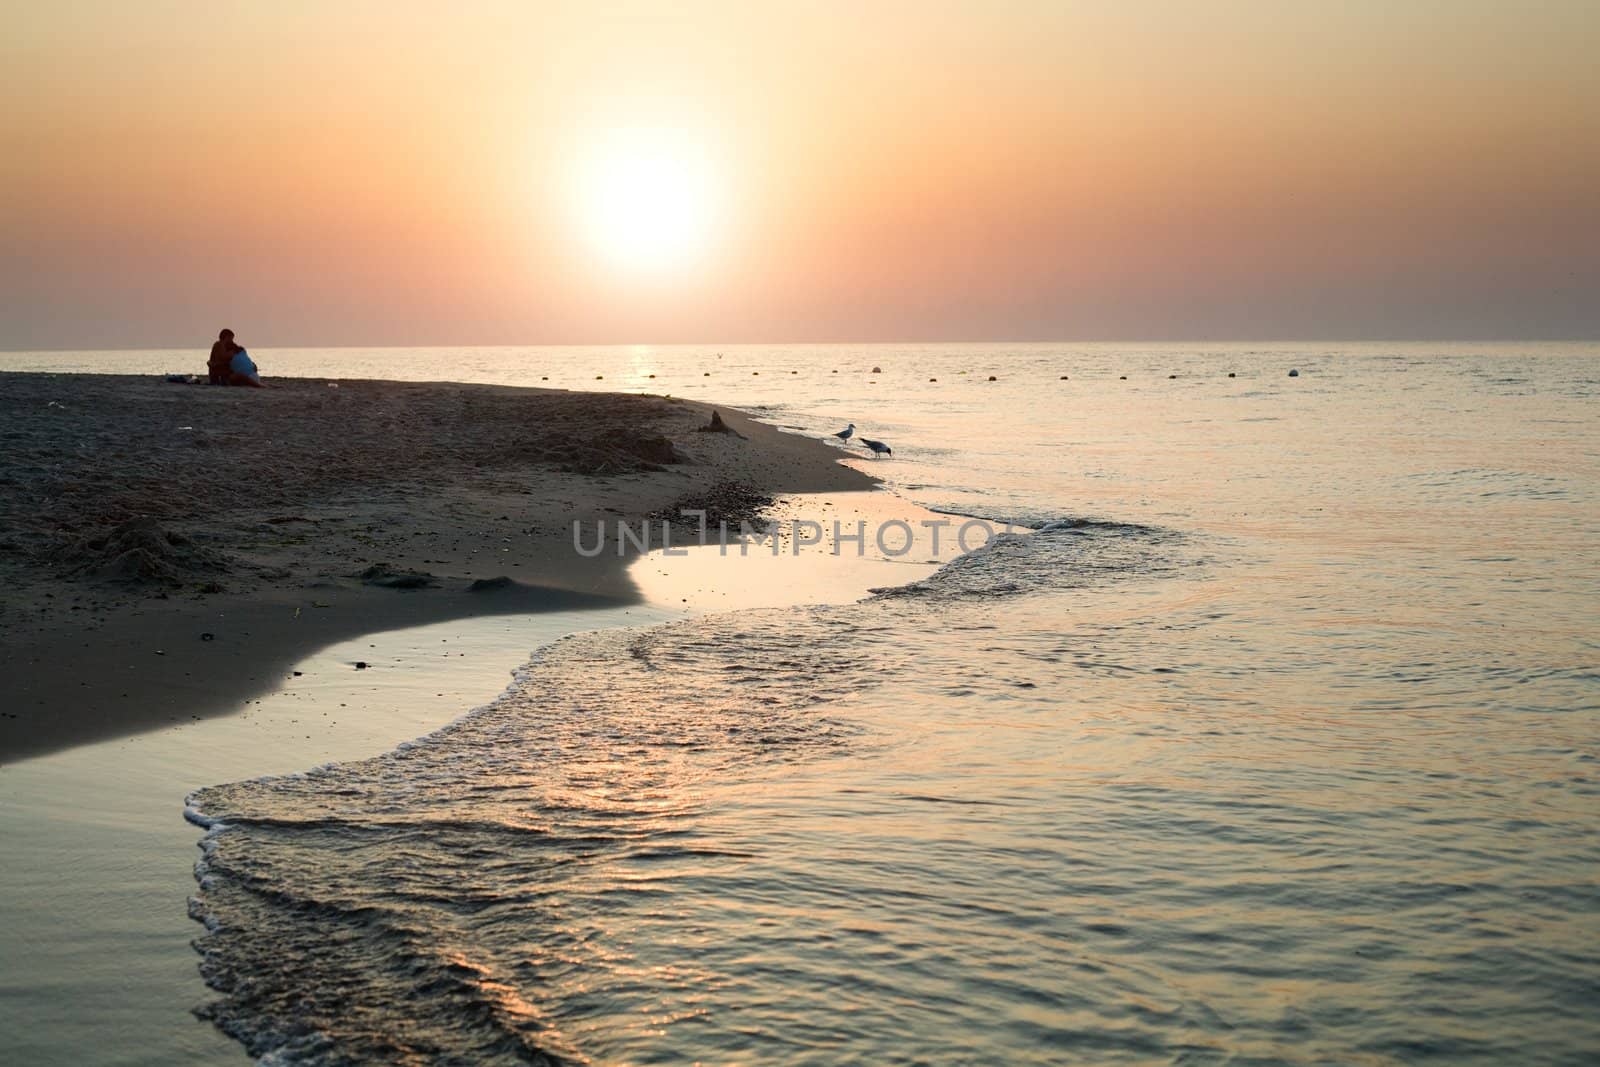 An image of beautiful sunrise at the sea